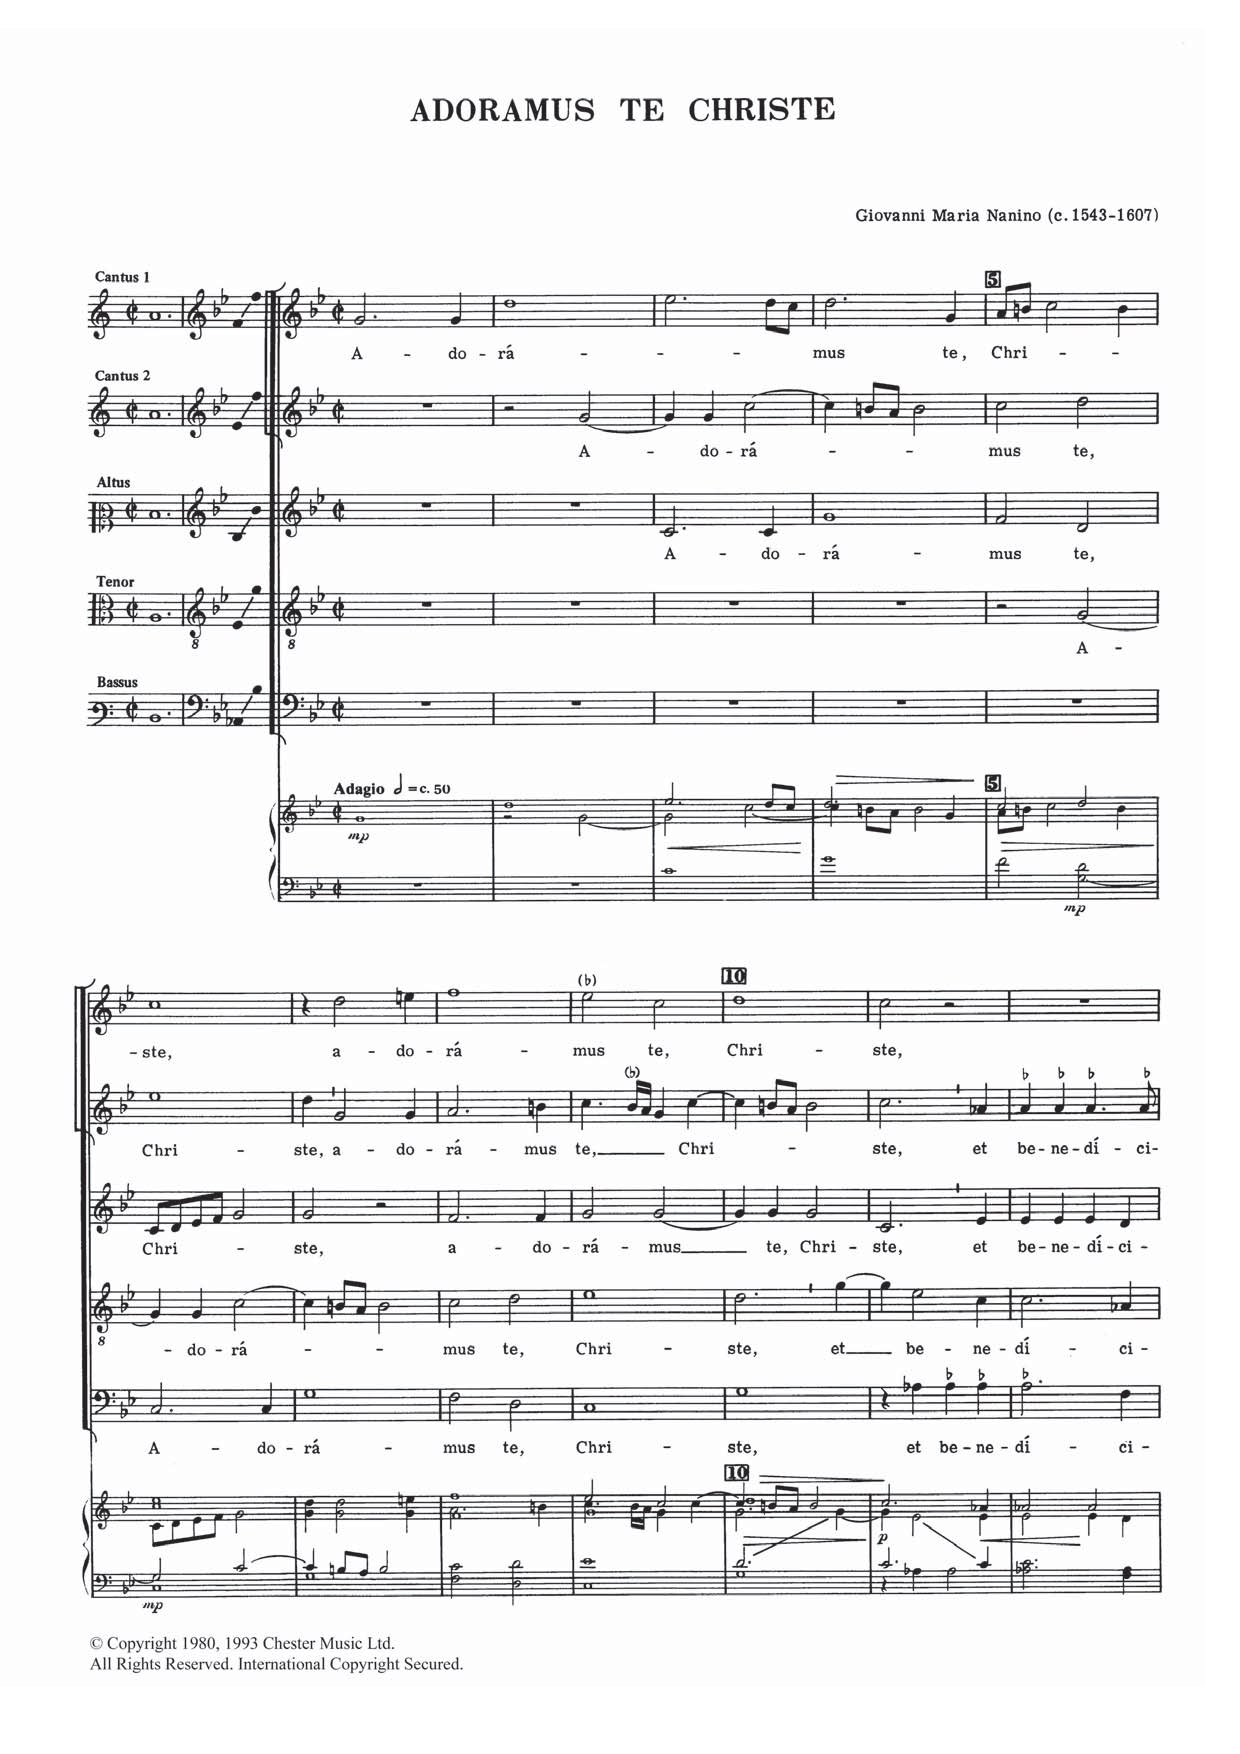 Giovanni Maria Nanino Adoramus Te Christe Sheet Music Notes & Chords for Choral SSATB - Download or Print PDF